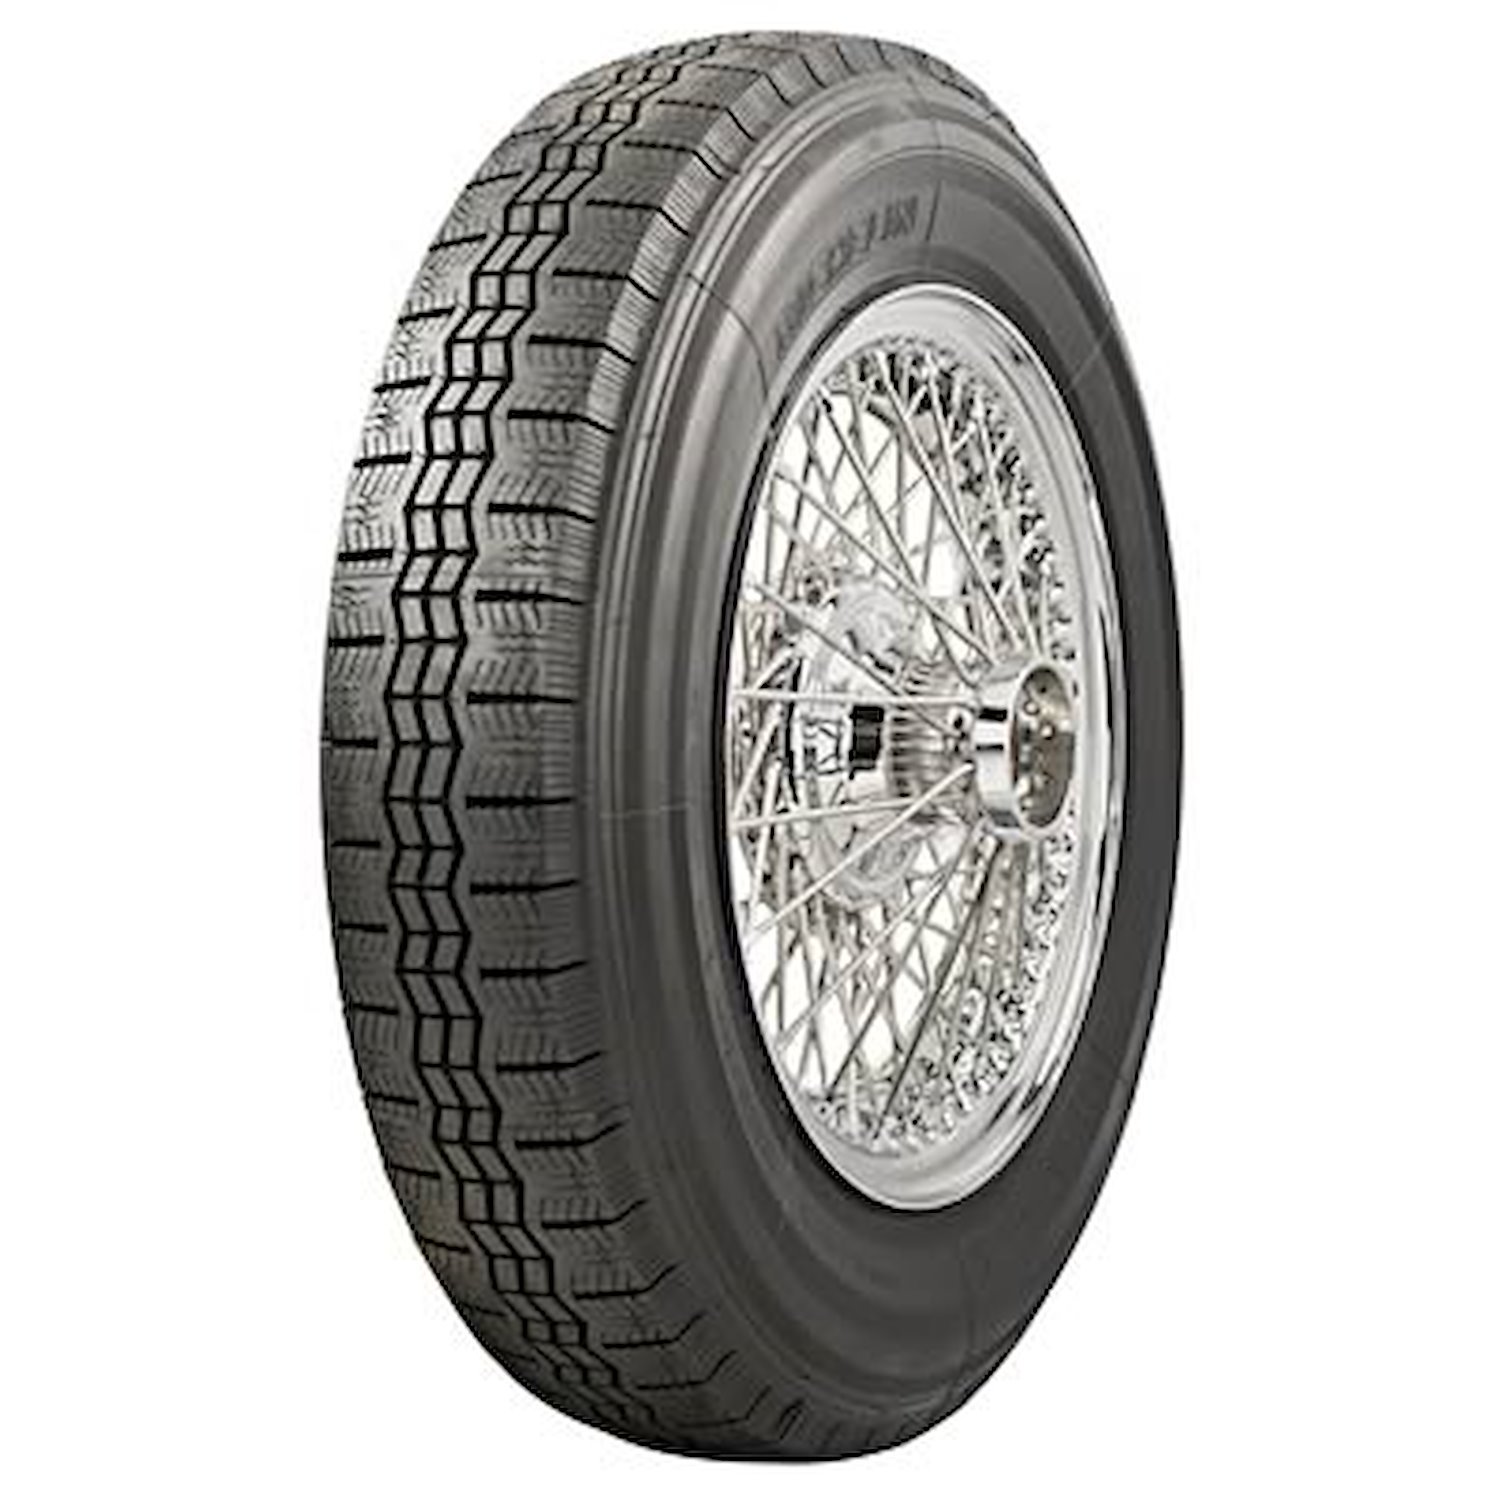 631785 Tire, Michelin X Radial, 155R400 83S